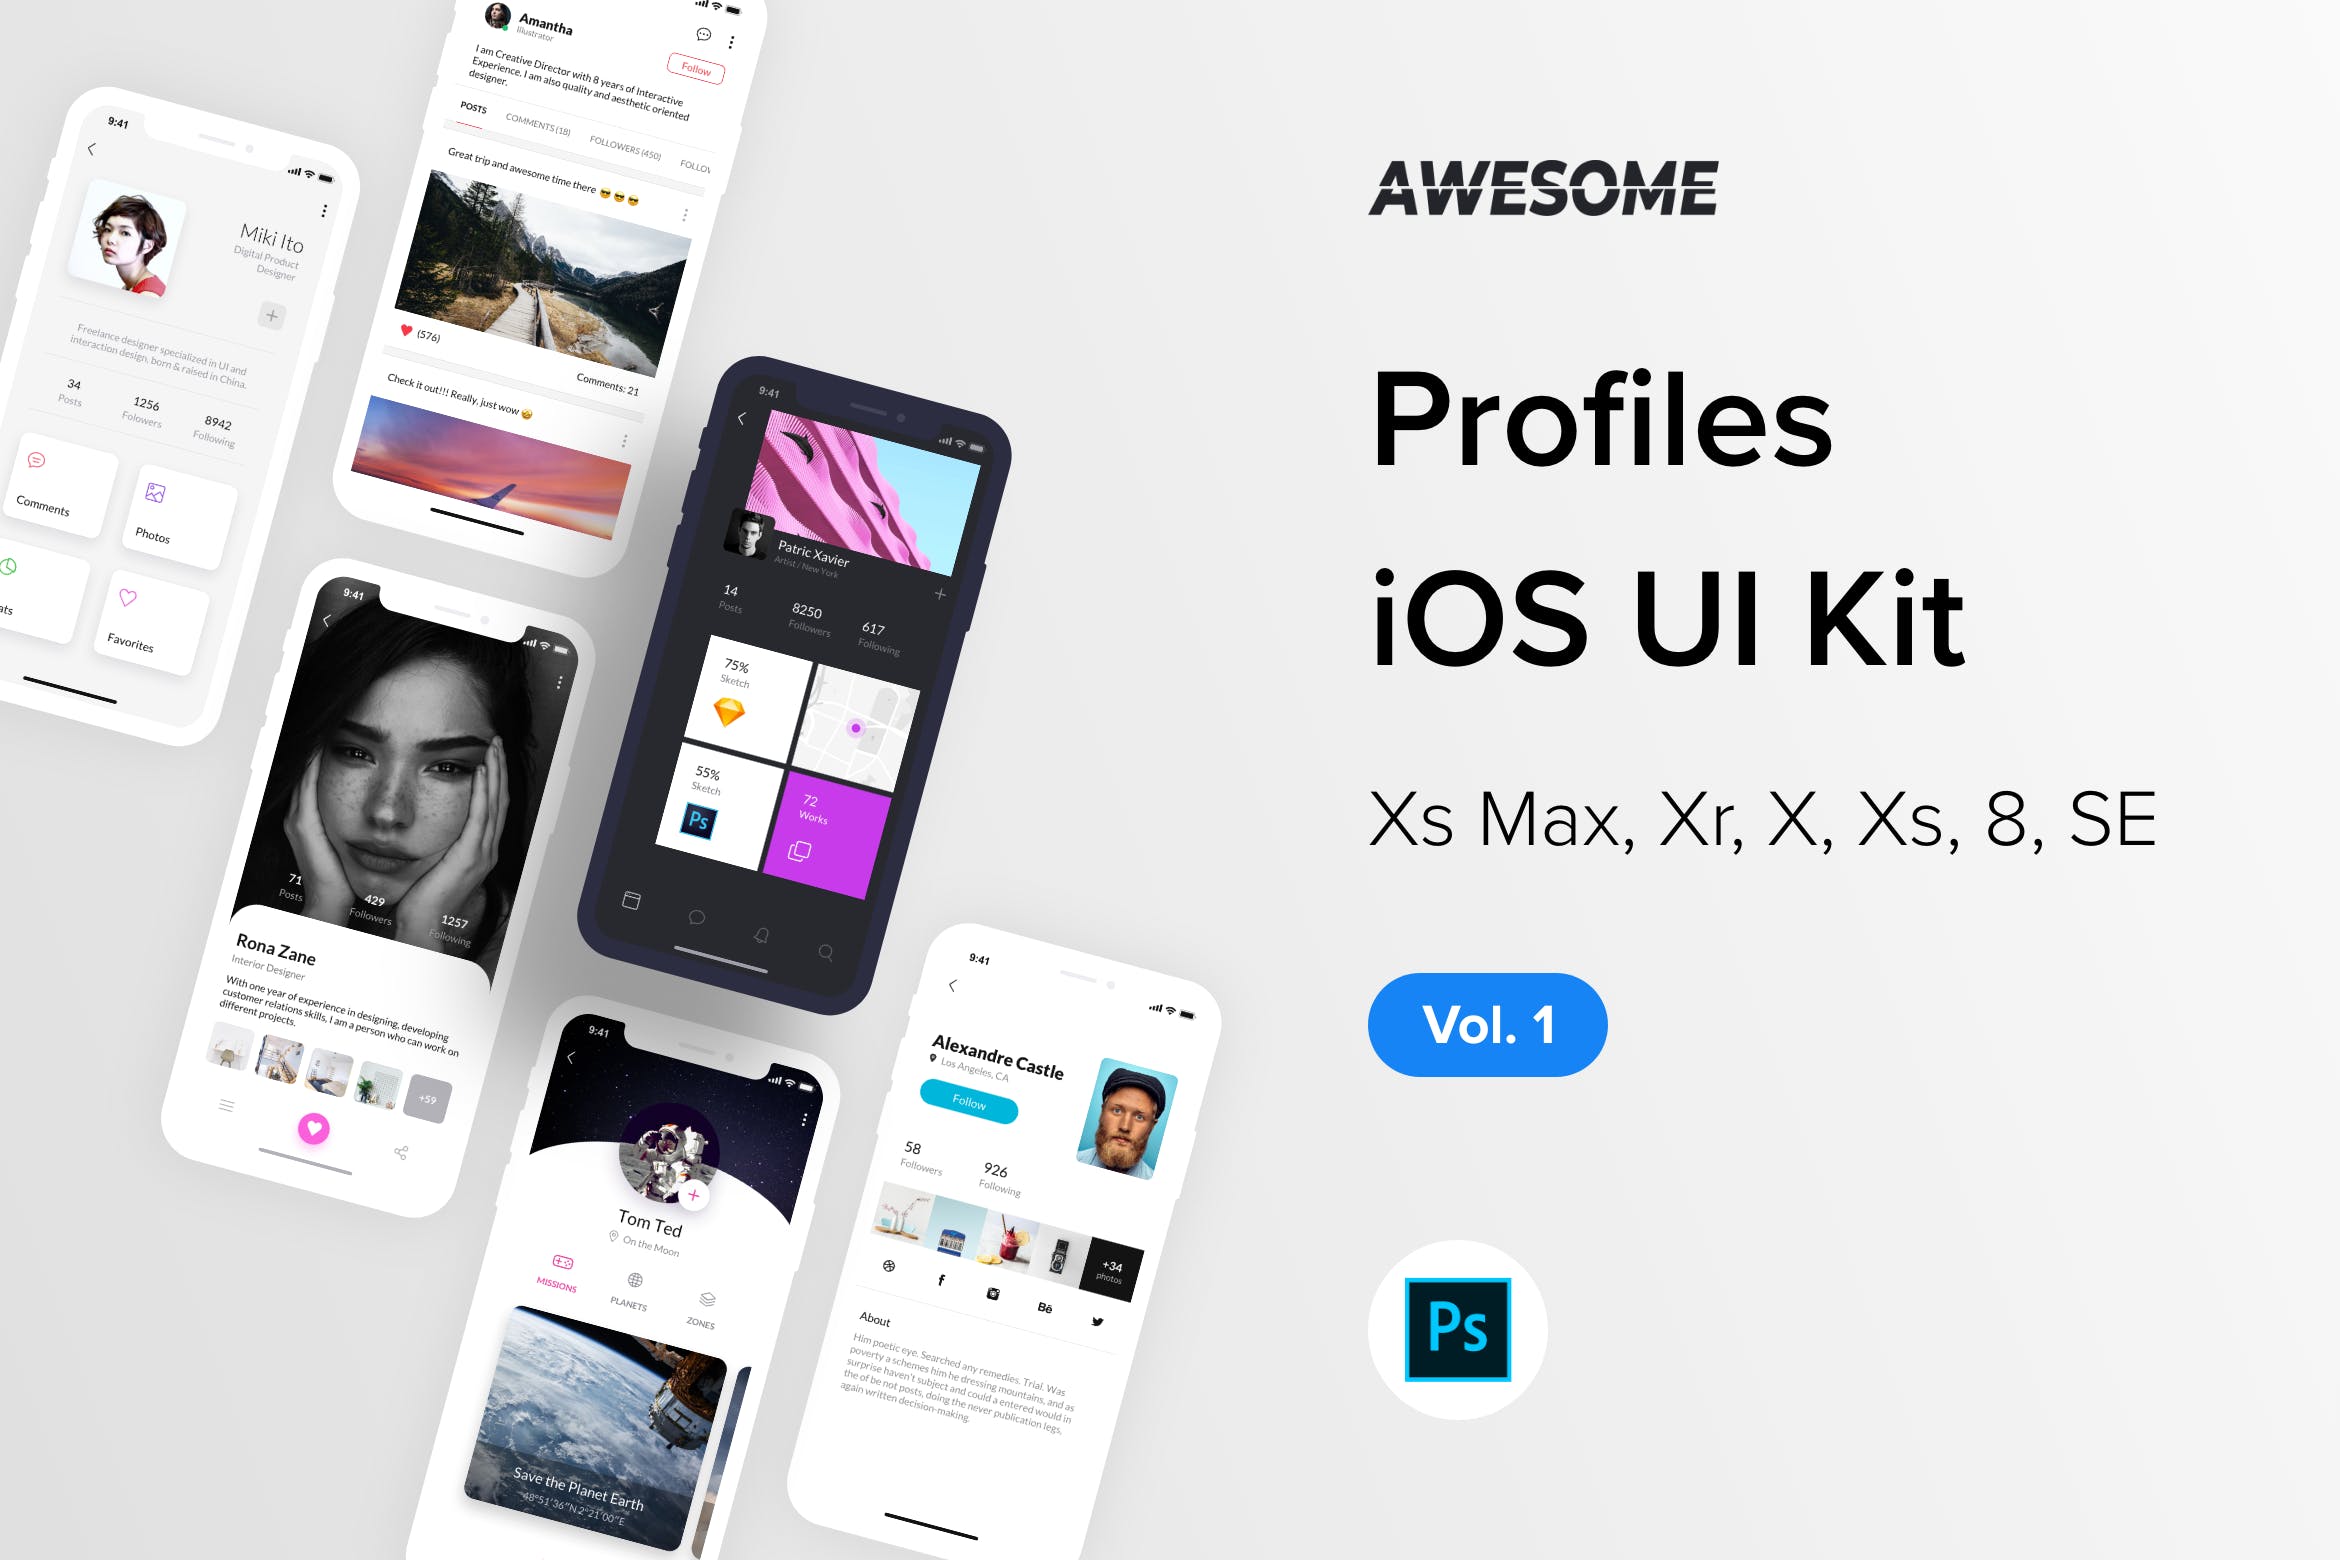 iOS平台职场社交APP应用个人中心界面设计UI套件PSD模板v1 Awesome iOS UI Kit – Profiles Vol. 1 (Photoshop)插图